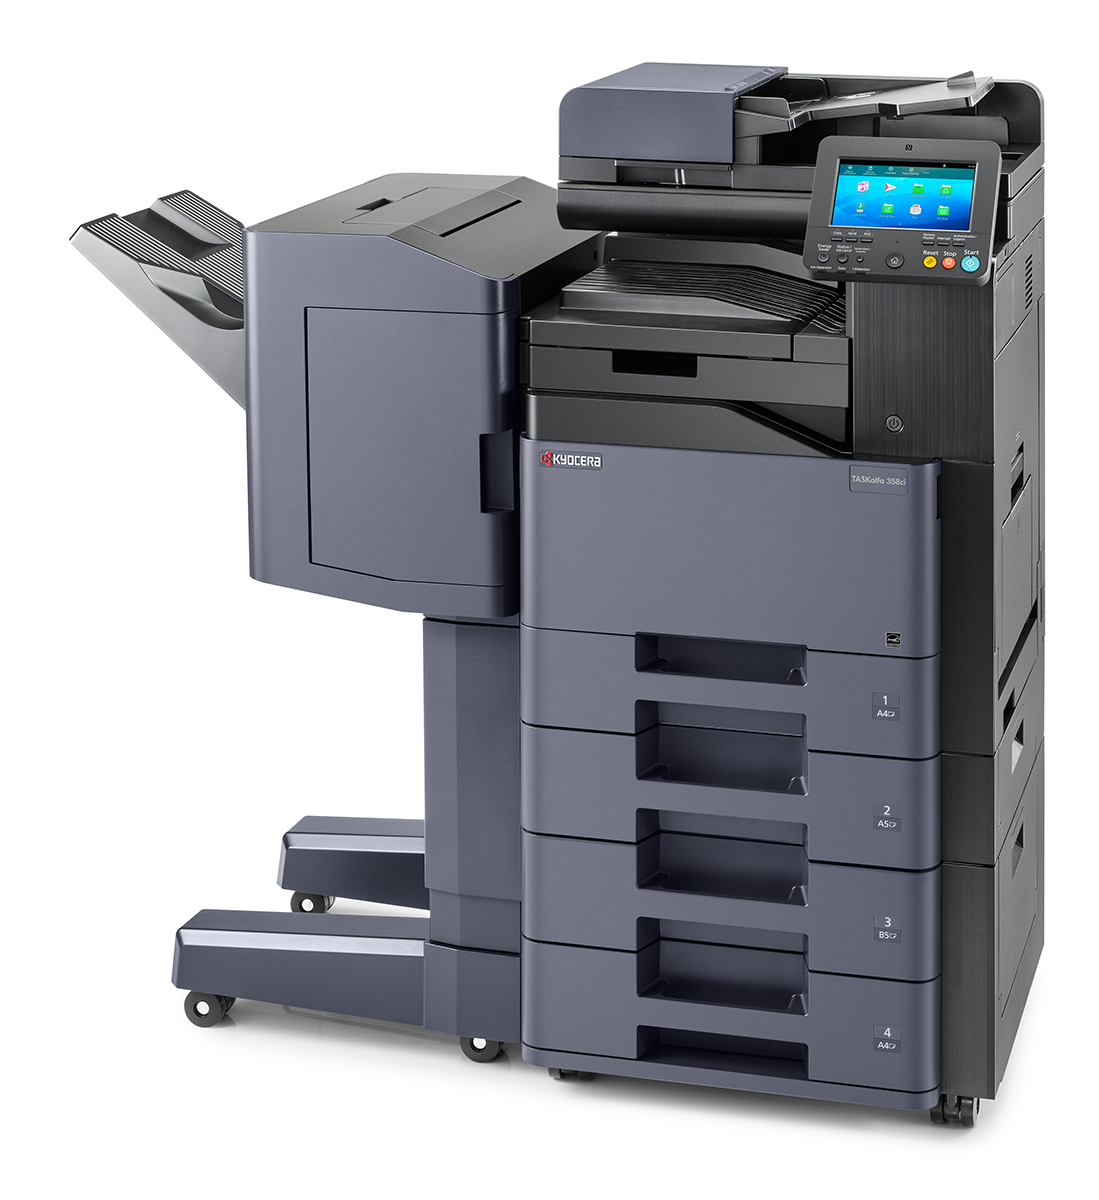 Alquiler impresora fotocopiadora precio por copia 35 ppm empresas